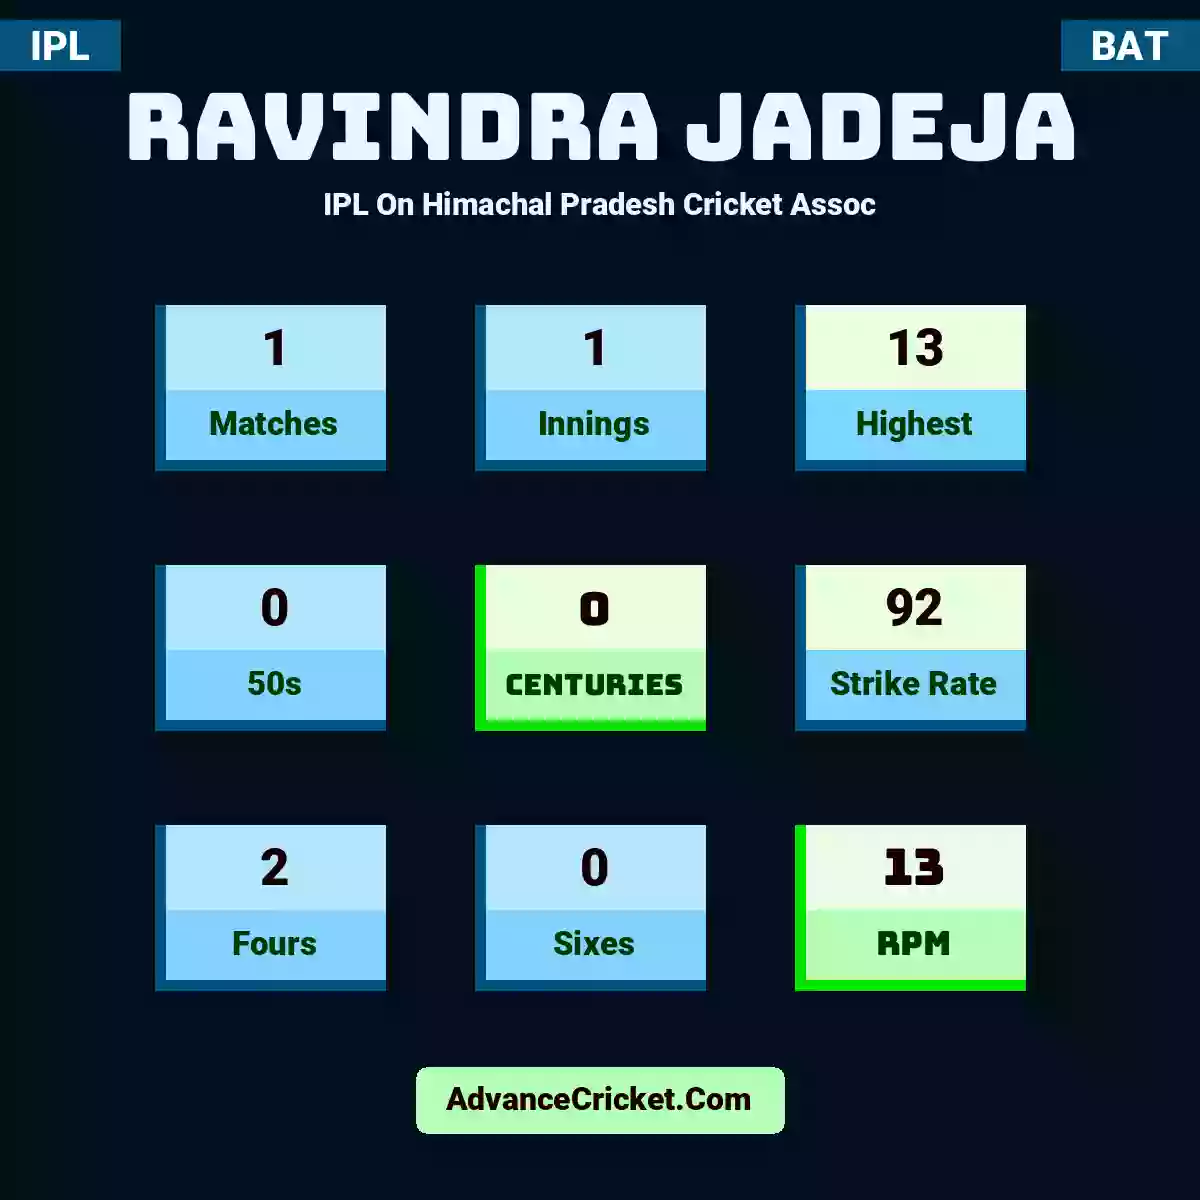 Ravindra Jadeja IPL  On Himachal Pradesh Cricket Assoc, Ravindra Jadeja played 1 matches, scored 13 runs as highest, 0 half-centuries, and 0 centuries, with a strike rate of 92. R.Jadeja hit 2 fours and 0 sixes, with an RPM of 13.